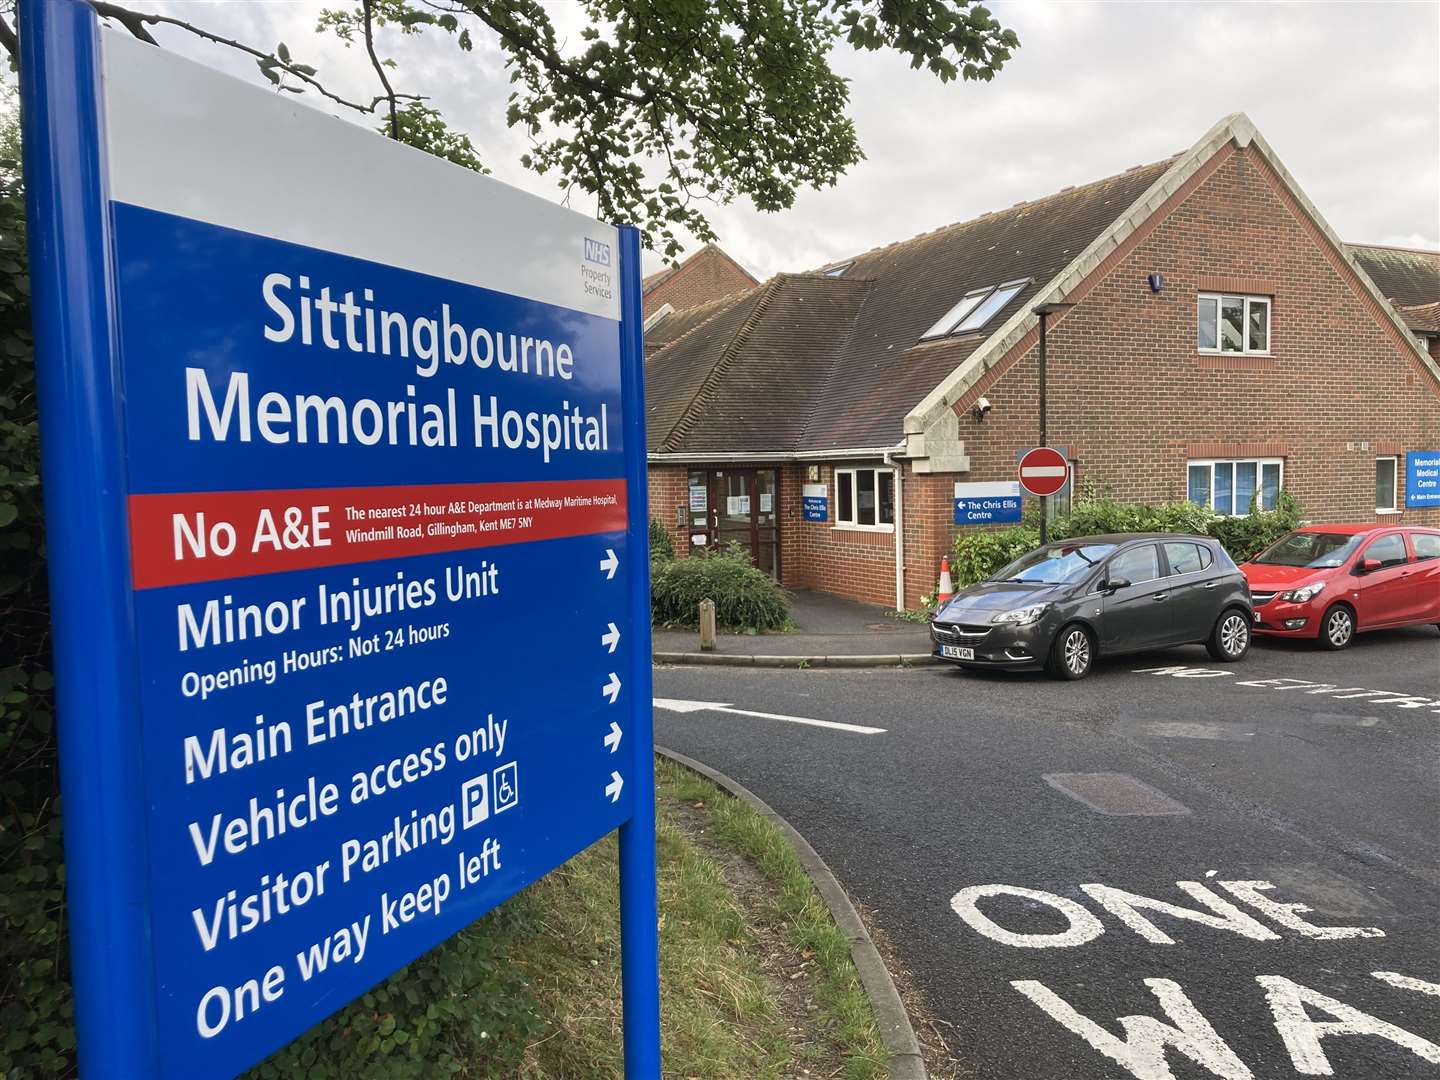 Wards of Sittingbourne Memorial Hospital were run by Virgin Care